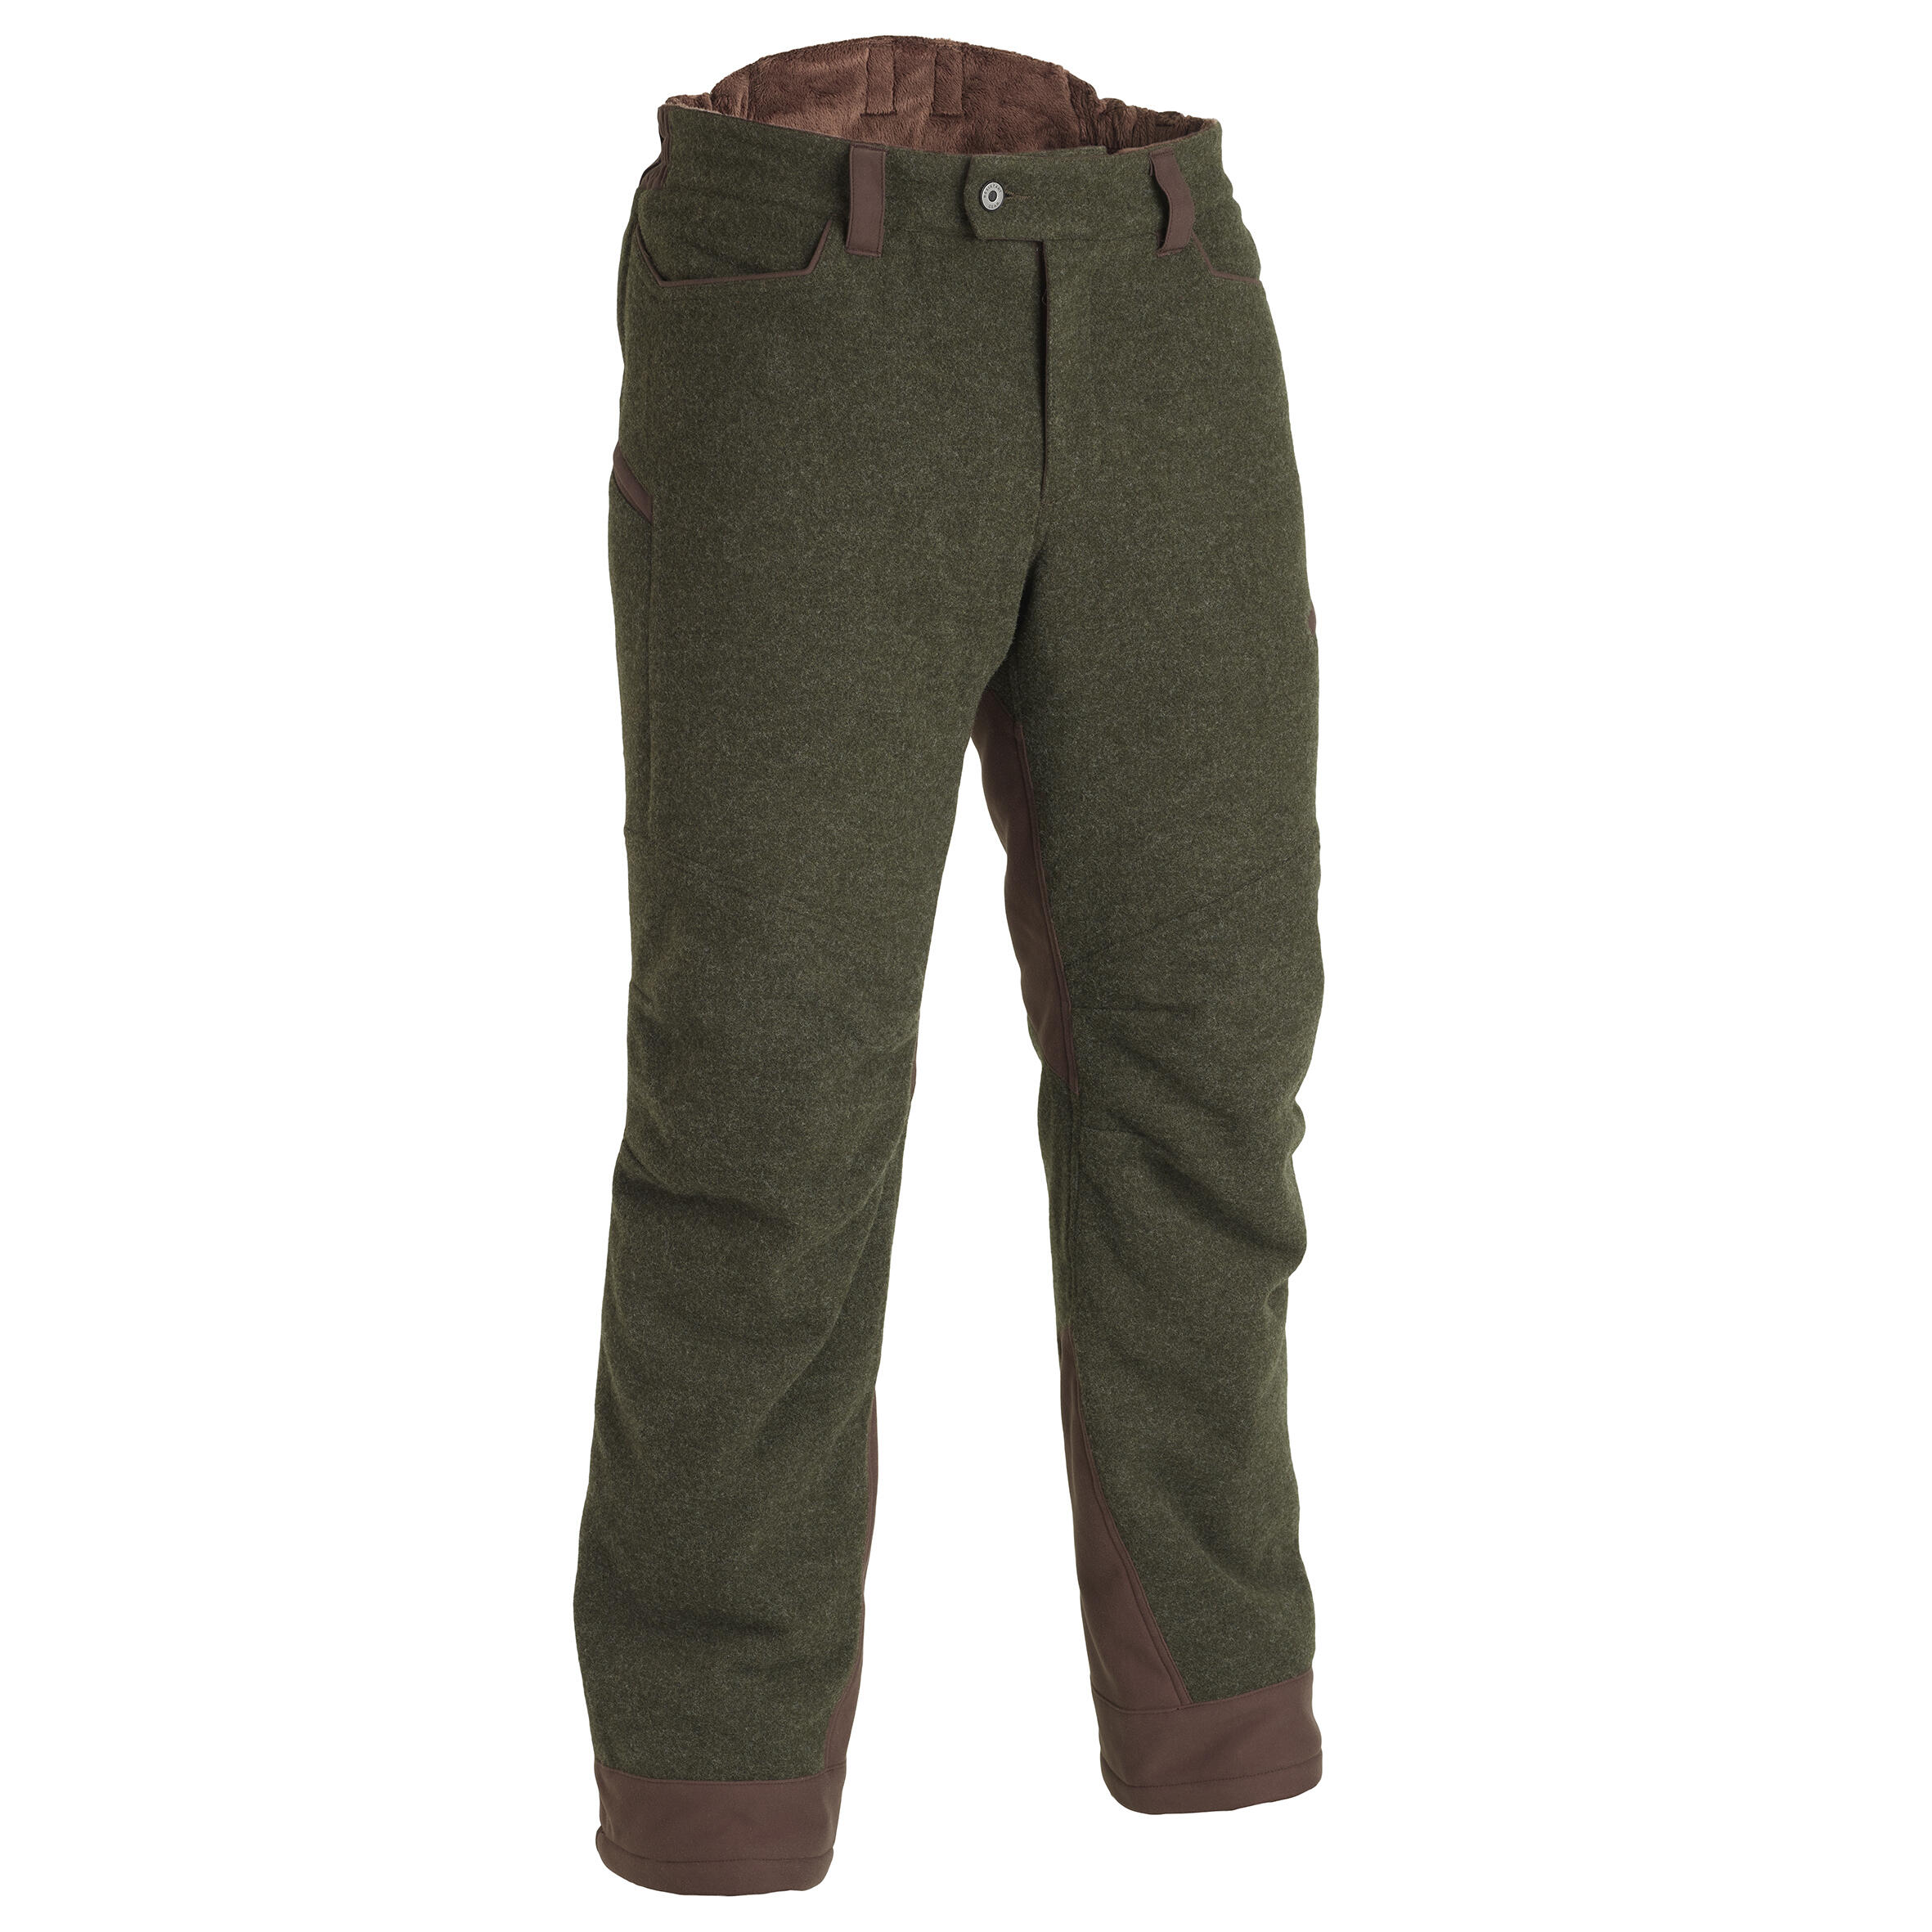 Decathlon | Pantaloni caccia 900 lana silenziosi verdi |  Solognac